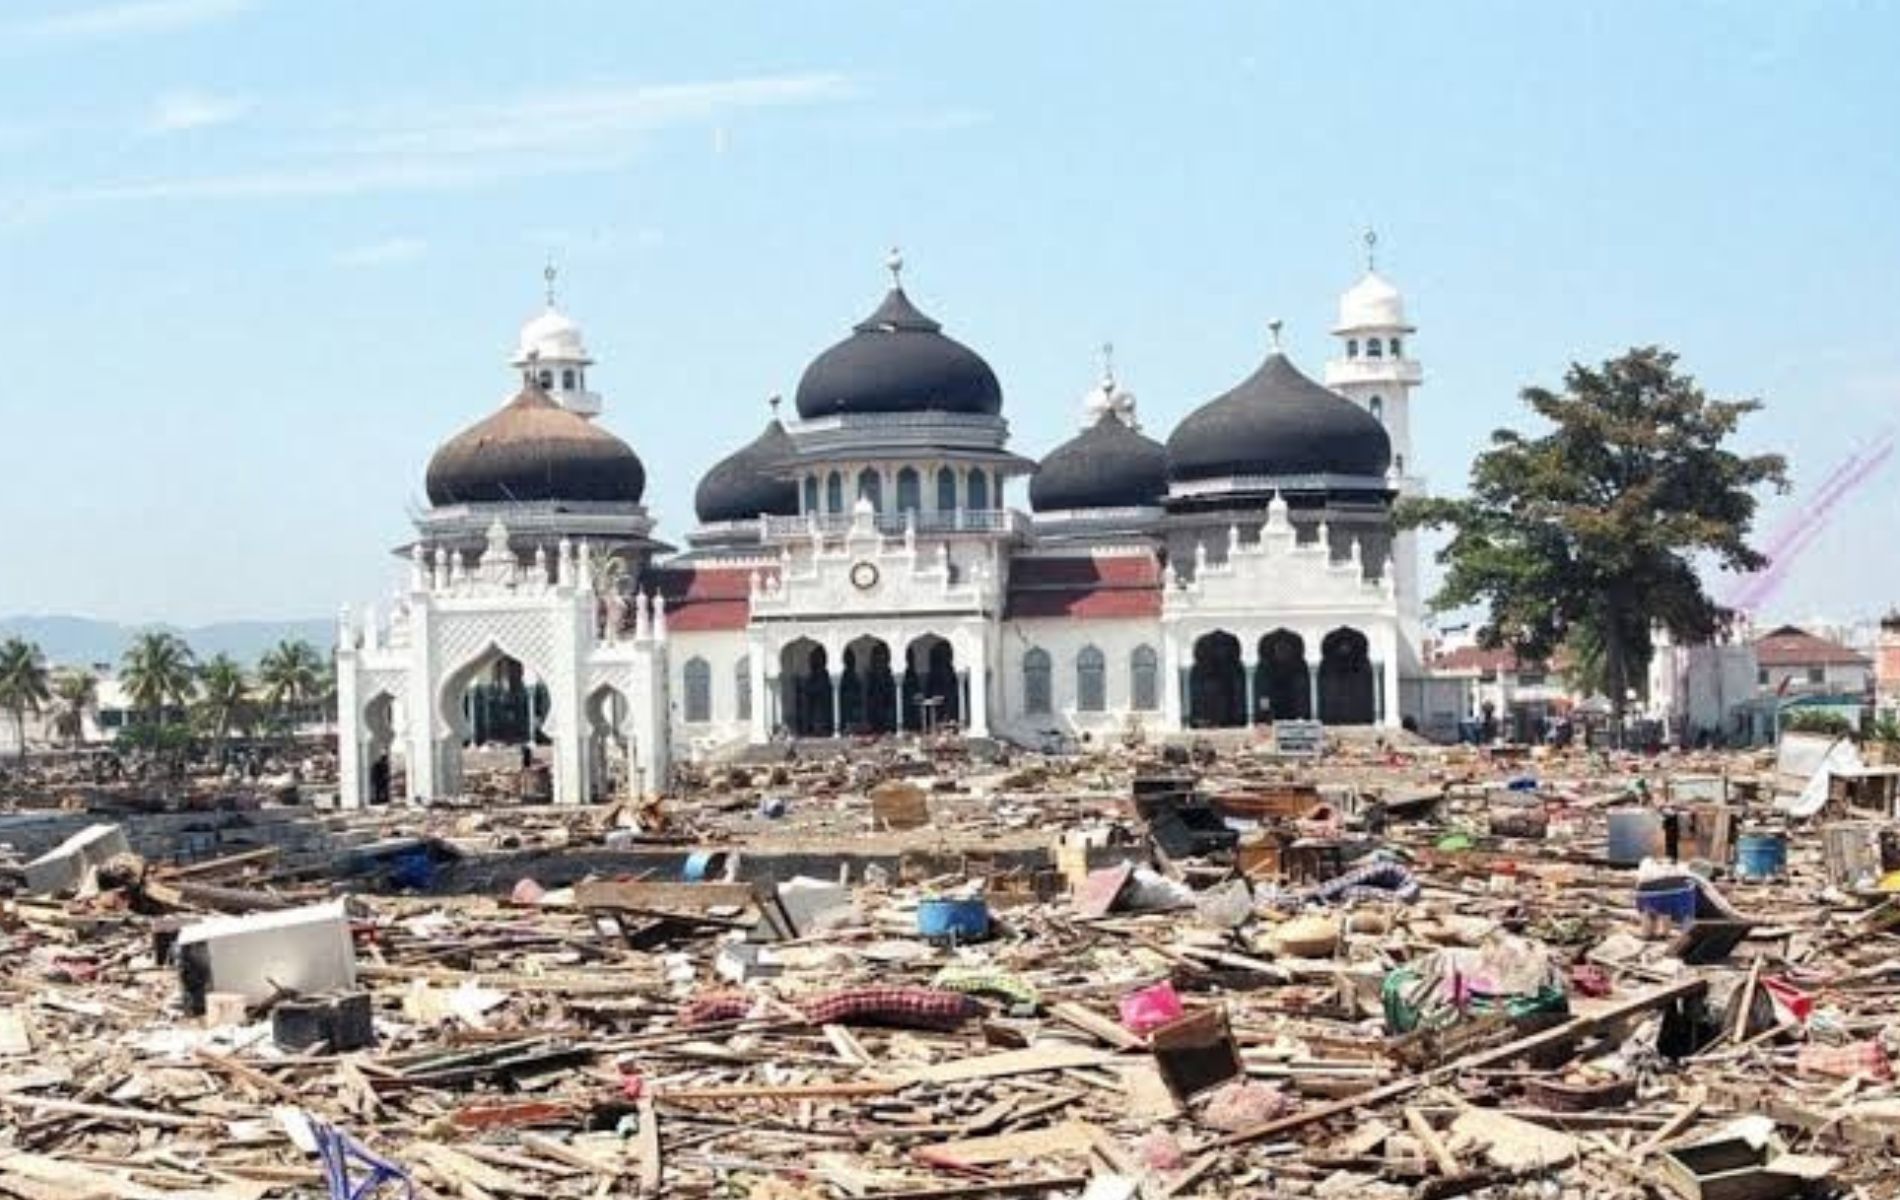 Teks gempa Aceh